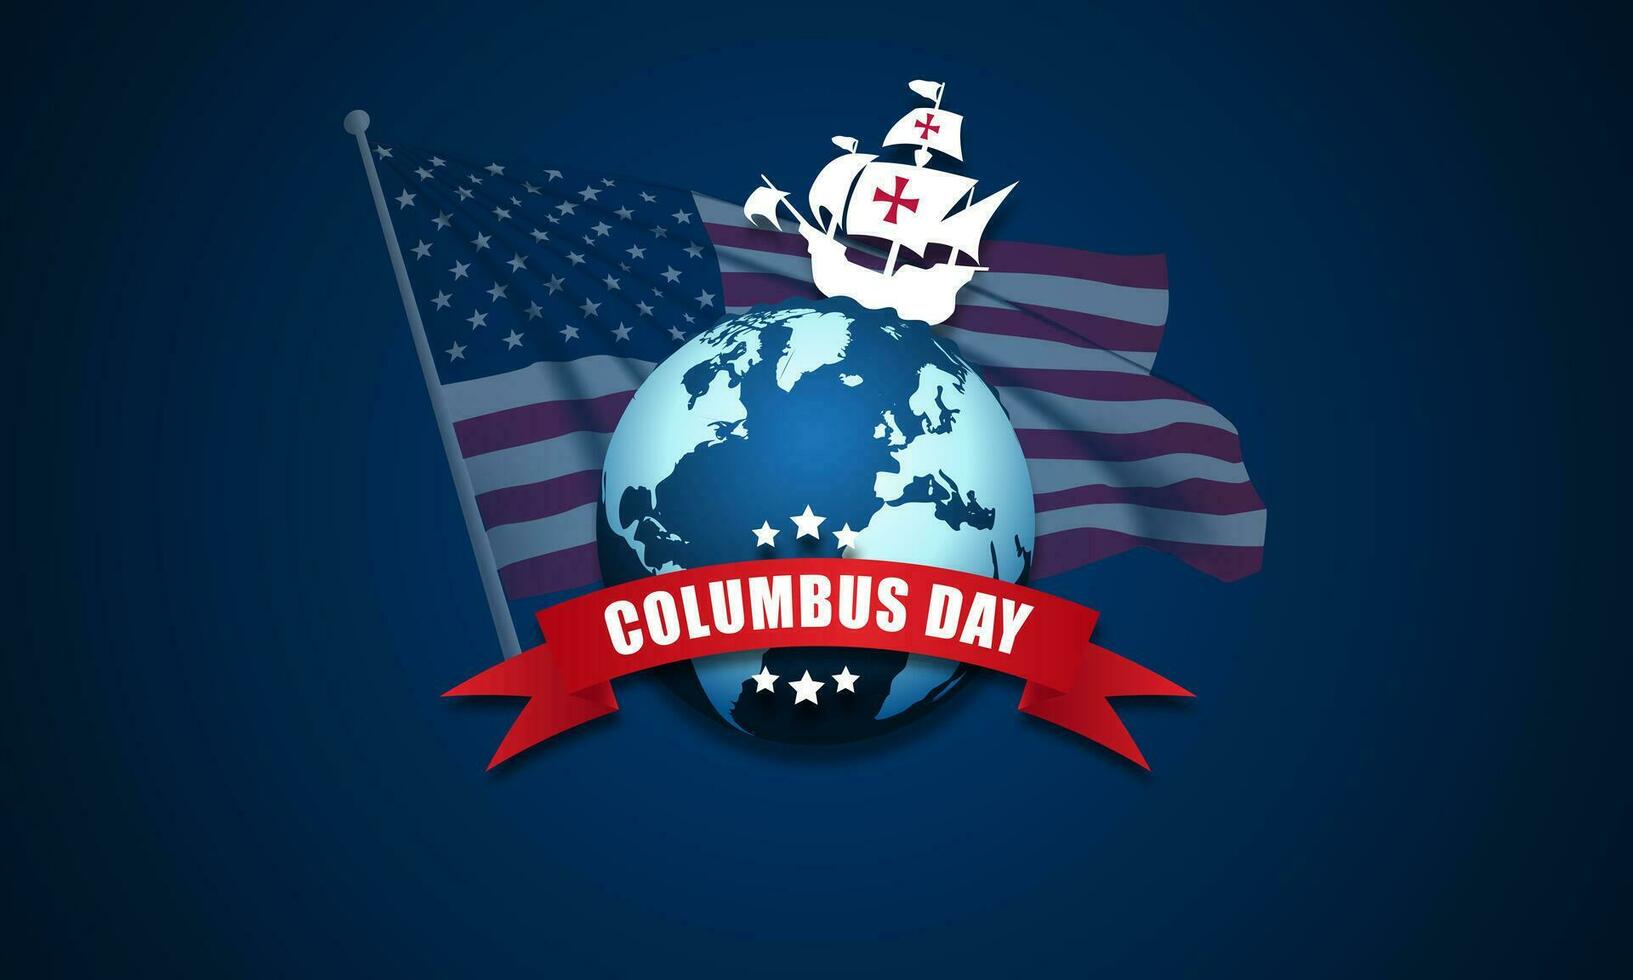 Happy Columbus Day background vector illustration